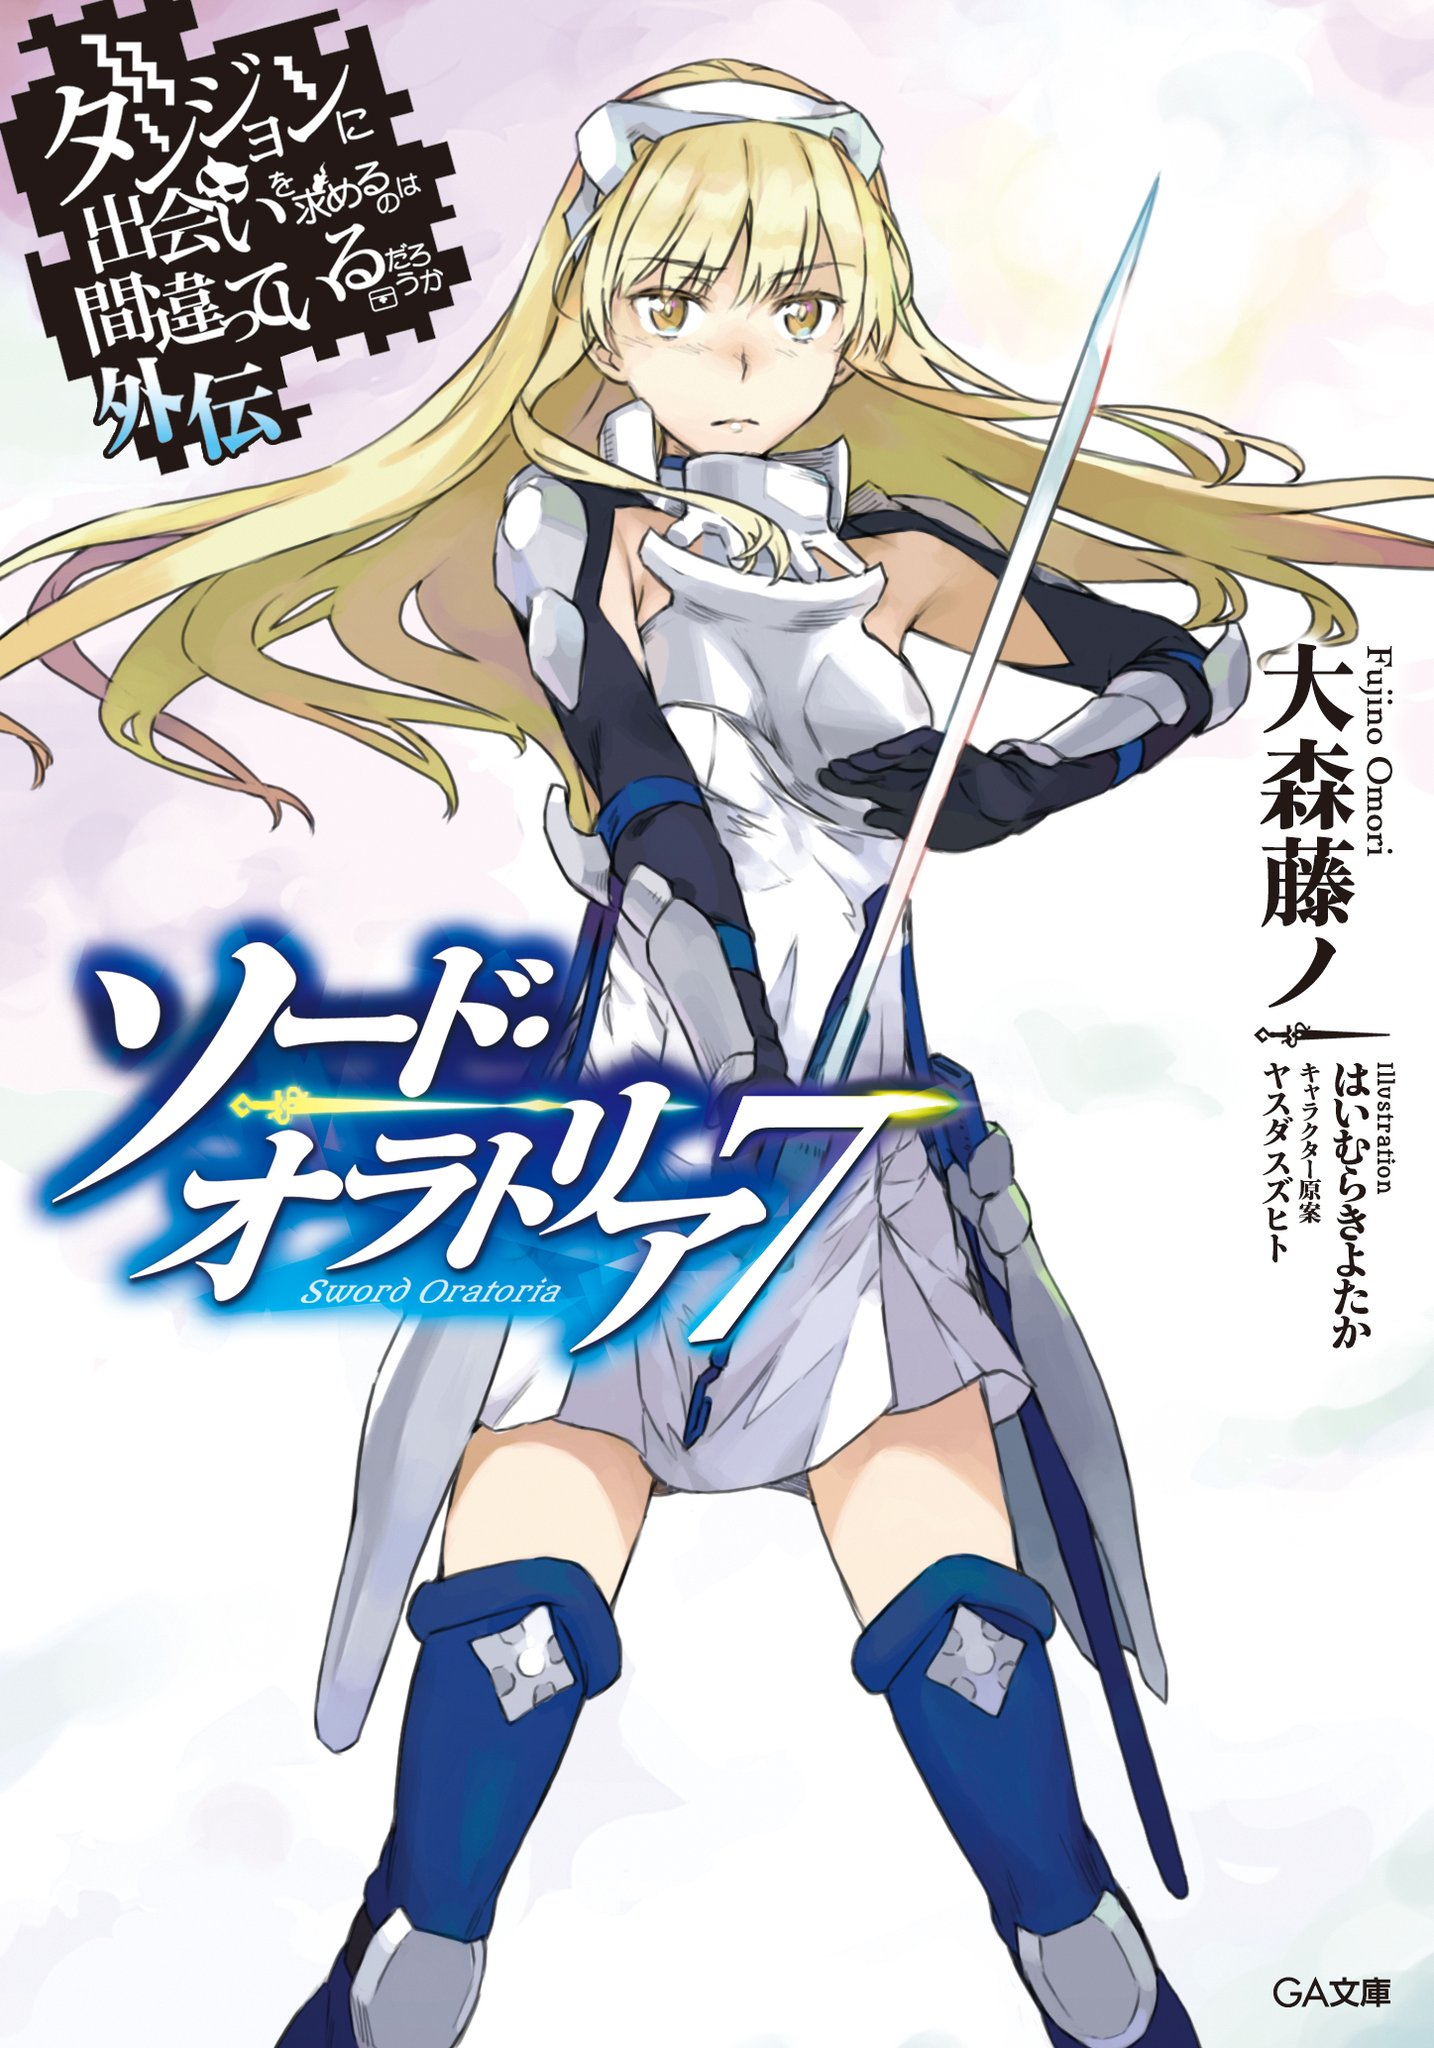 Sword Oratoria Light Novel Volume 4, DanMachi Wiki